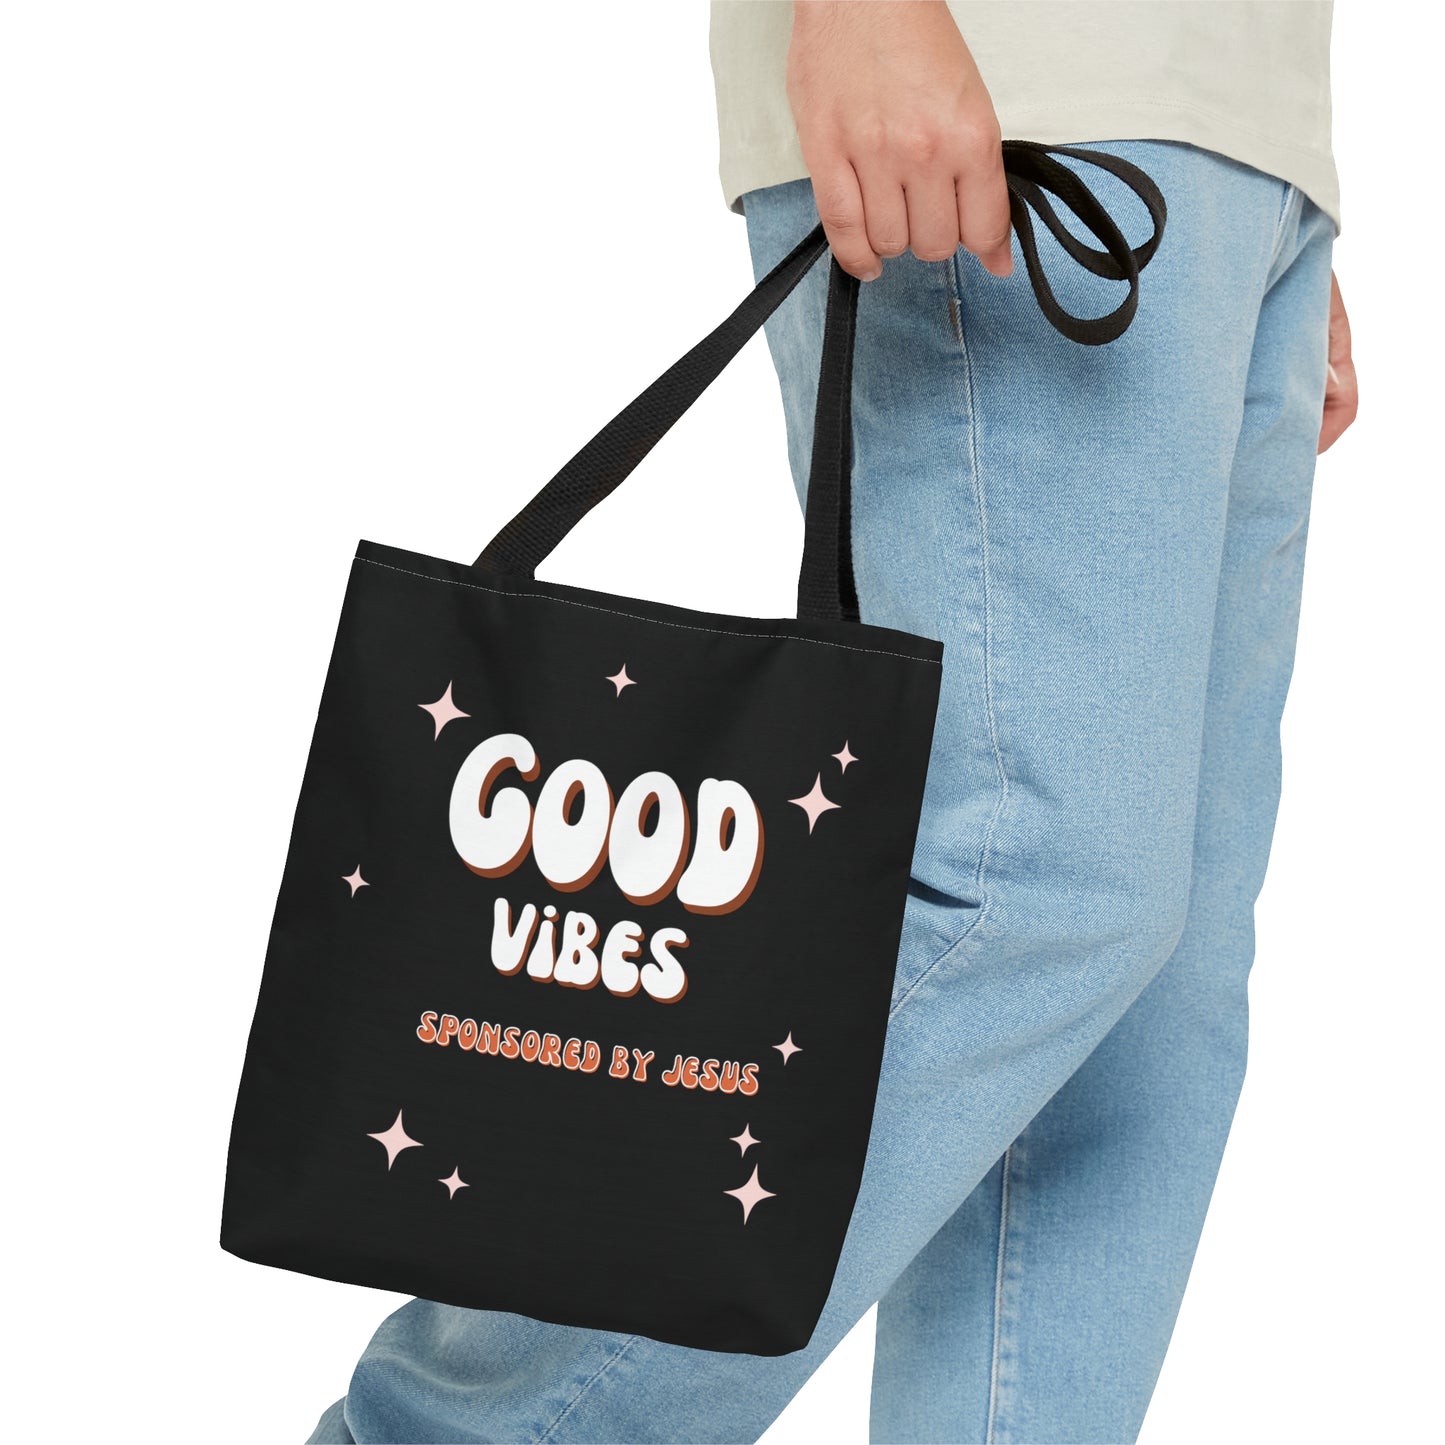 Good Vibes Sponsored By Jesus Christian Tote Bag Printify